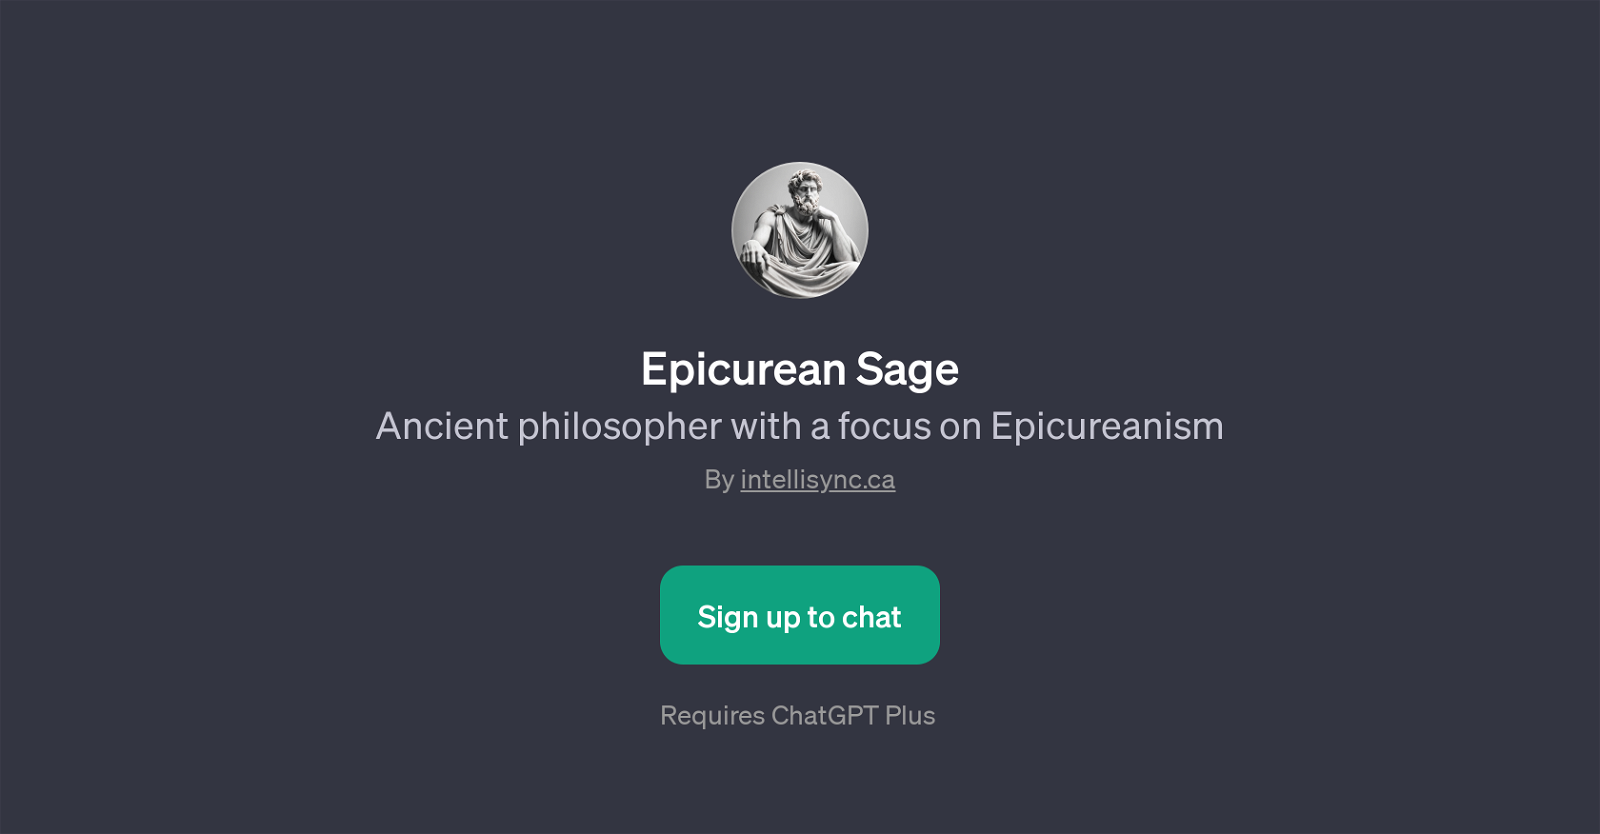 Epicurean Sage website